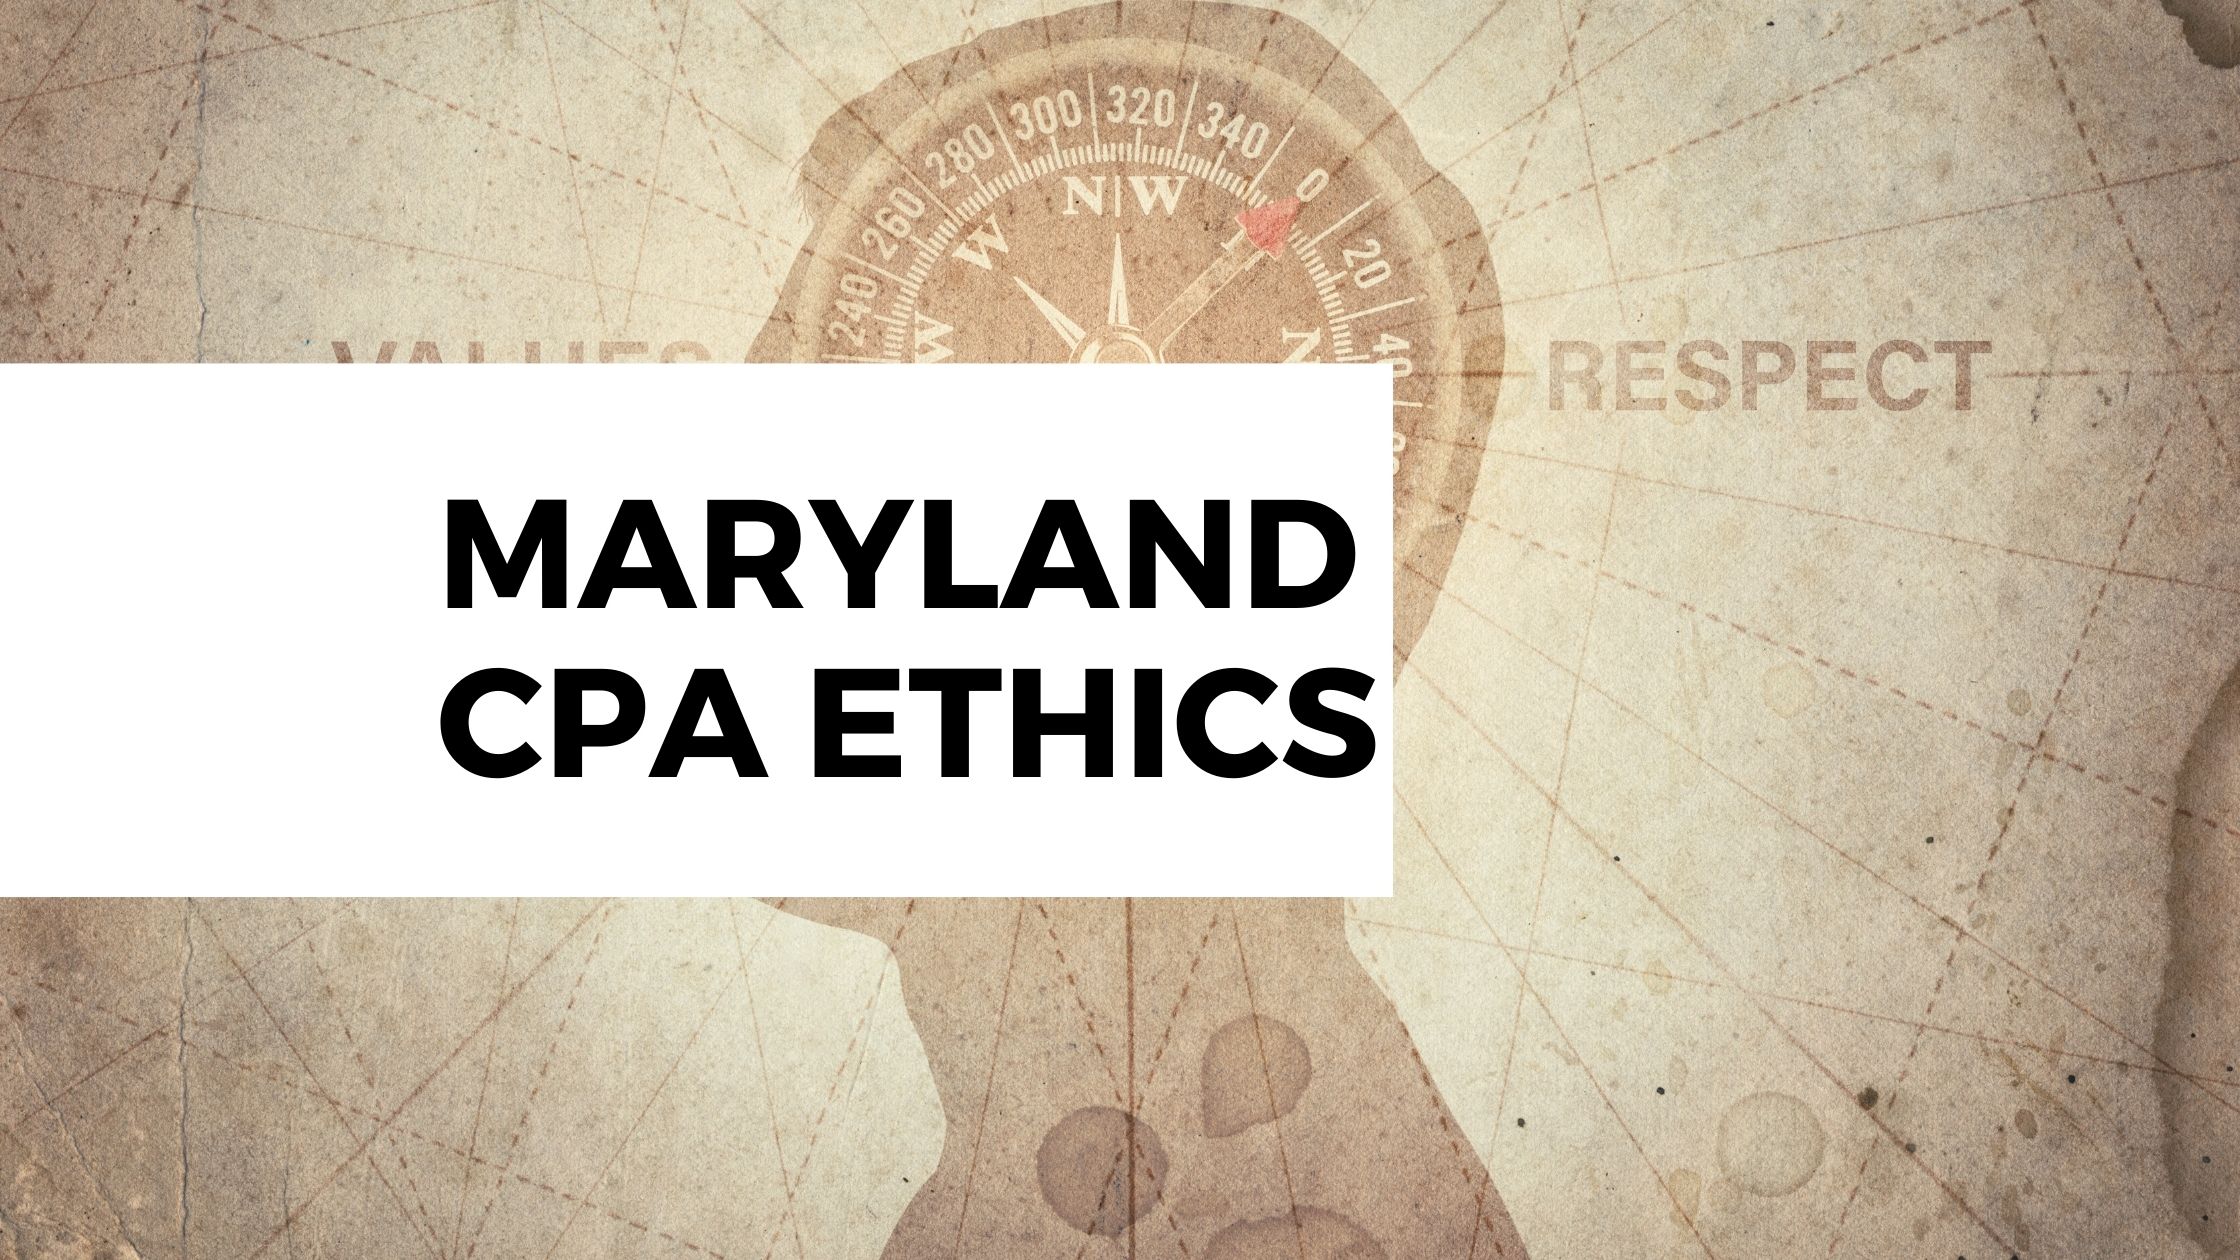 Maryland CPA Ethics, Ellicott City, MD